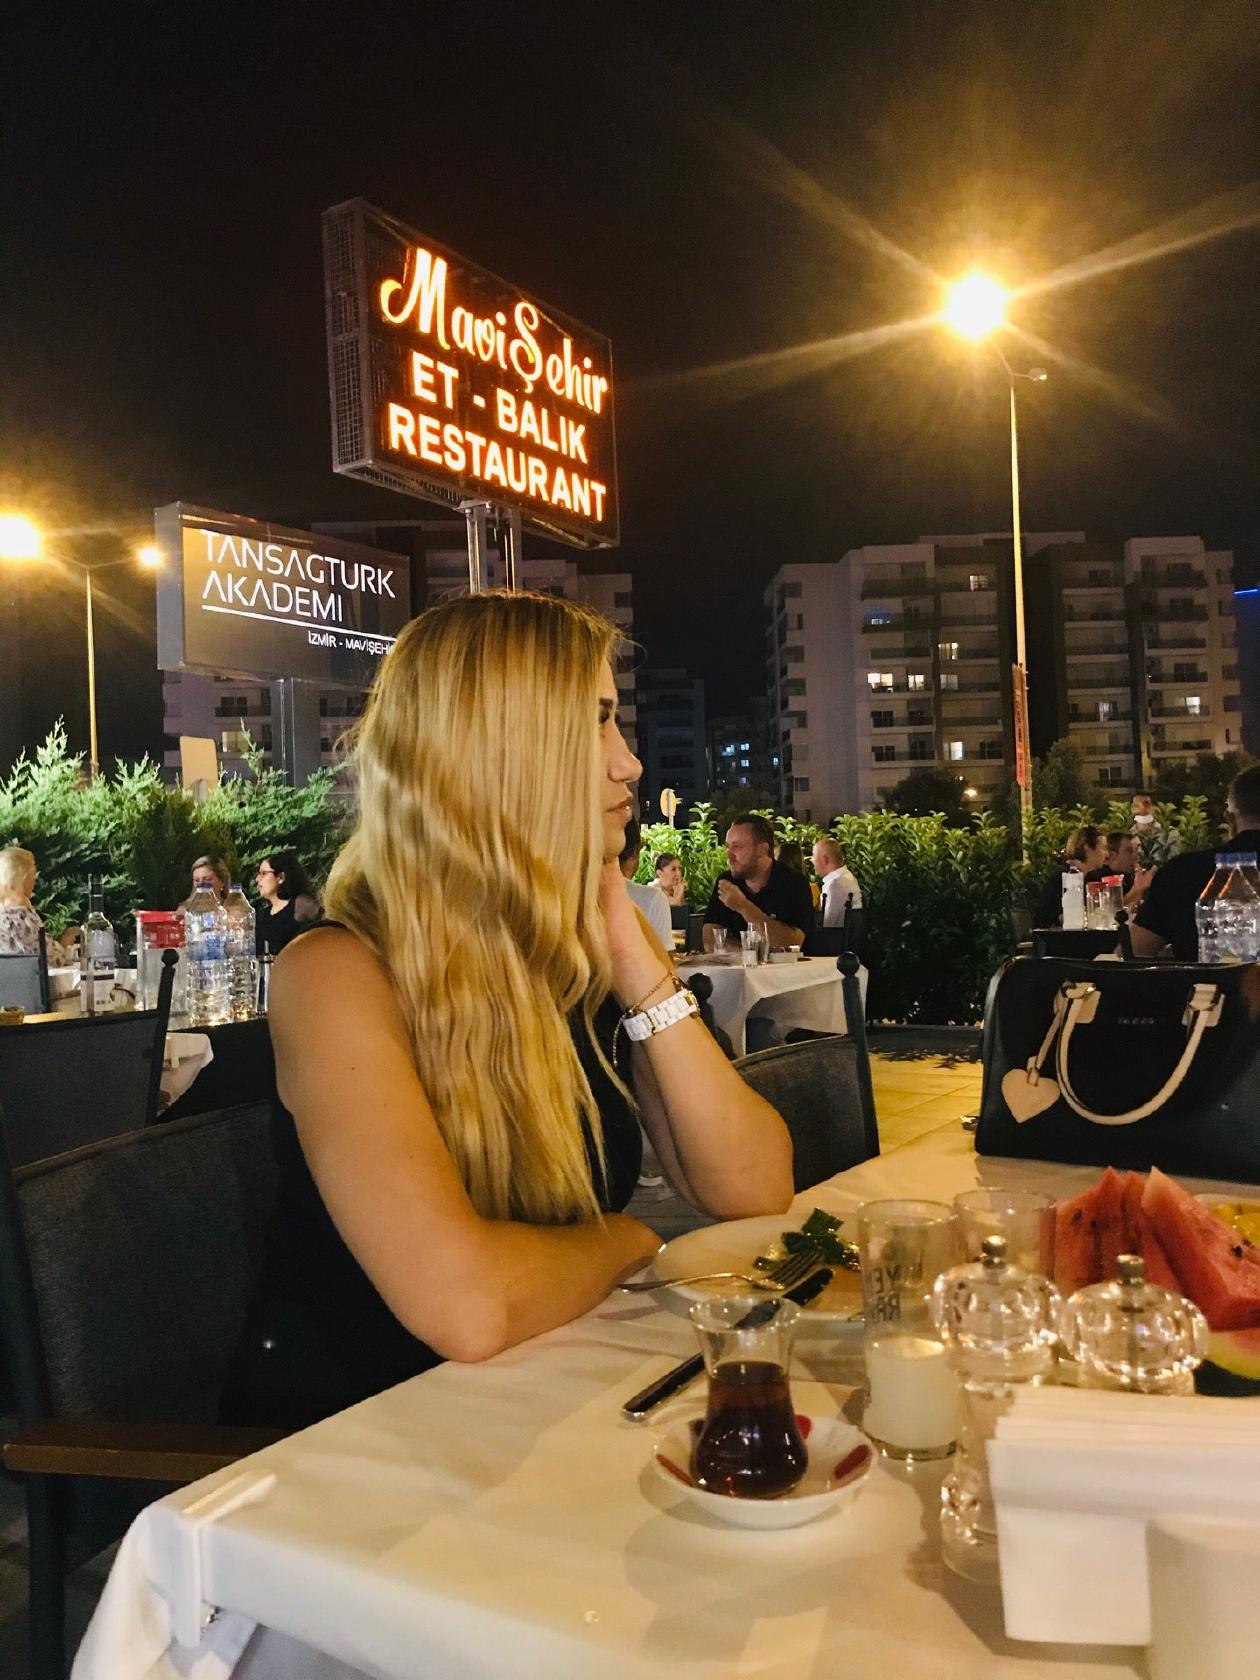 Mavisehir Et Balik Restaurant Izmir Restaurant Reviews